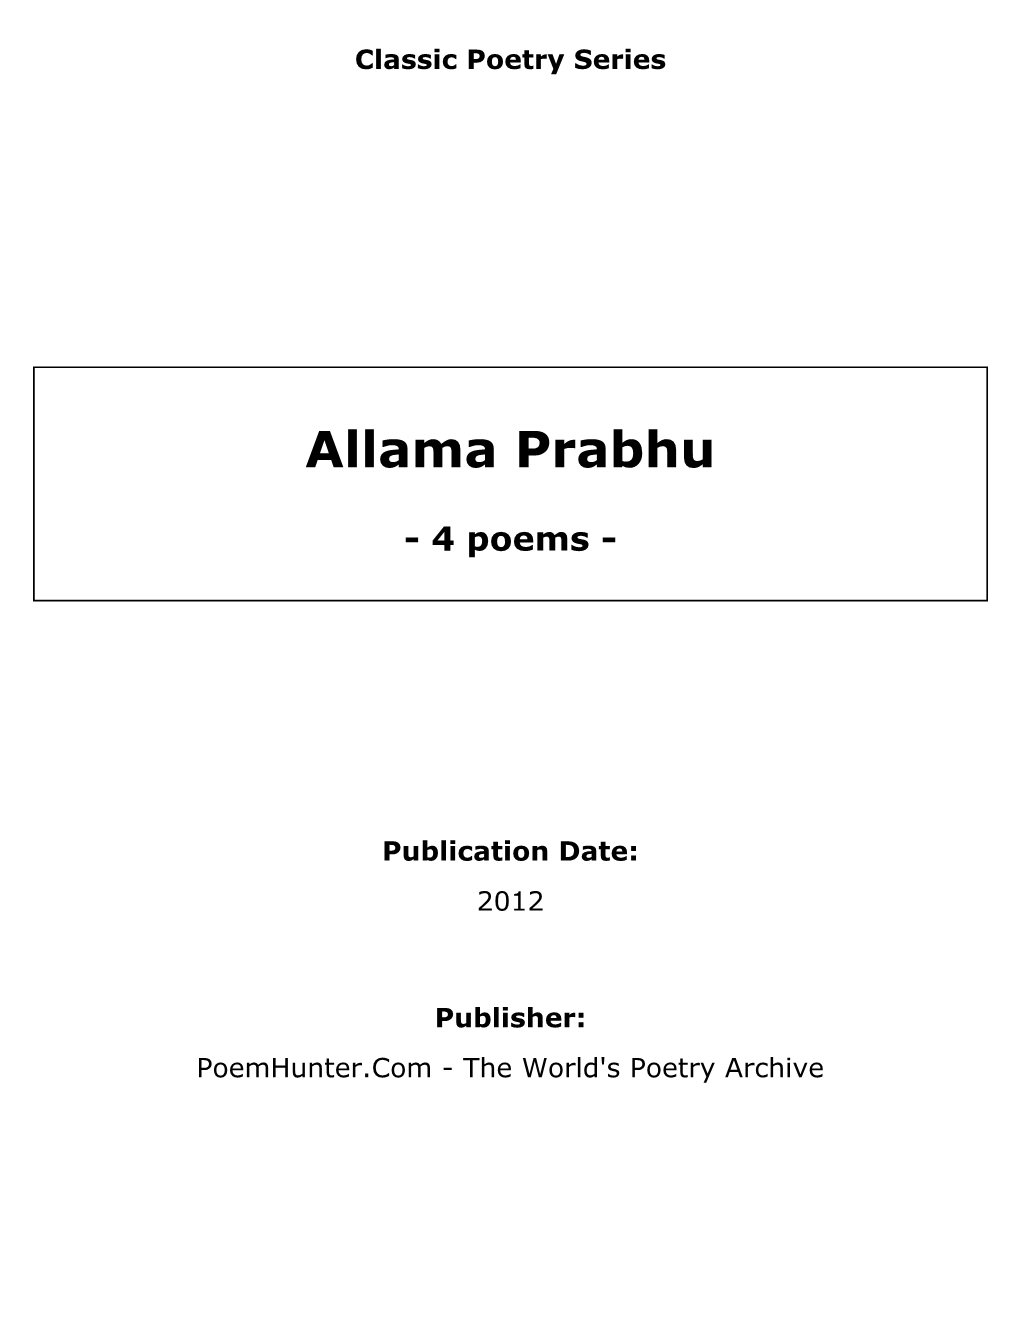 Allama Prabhu